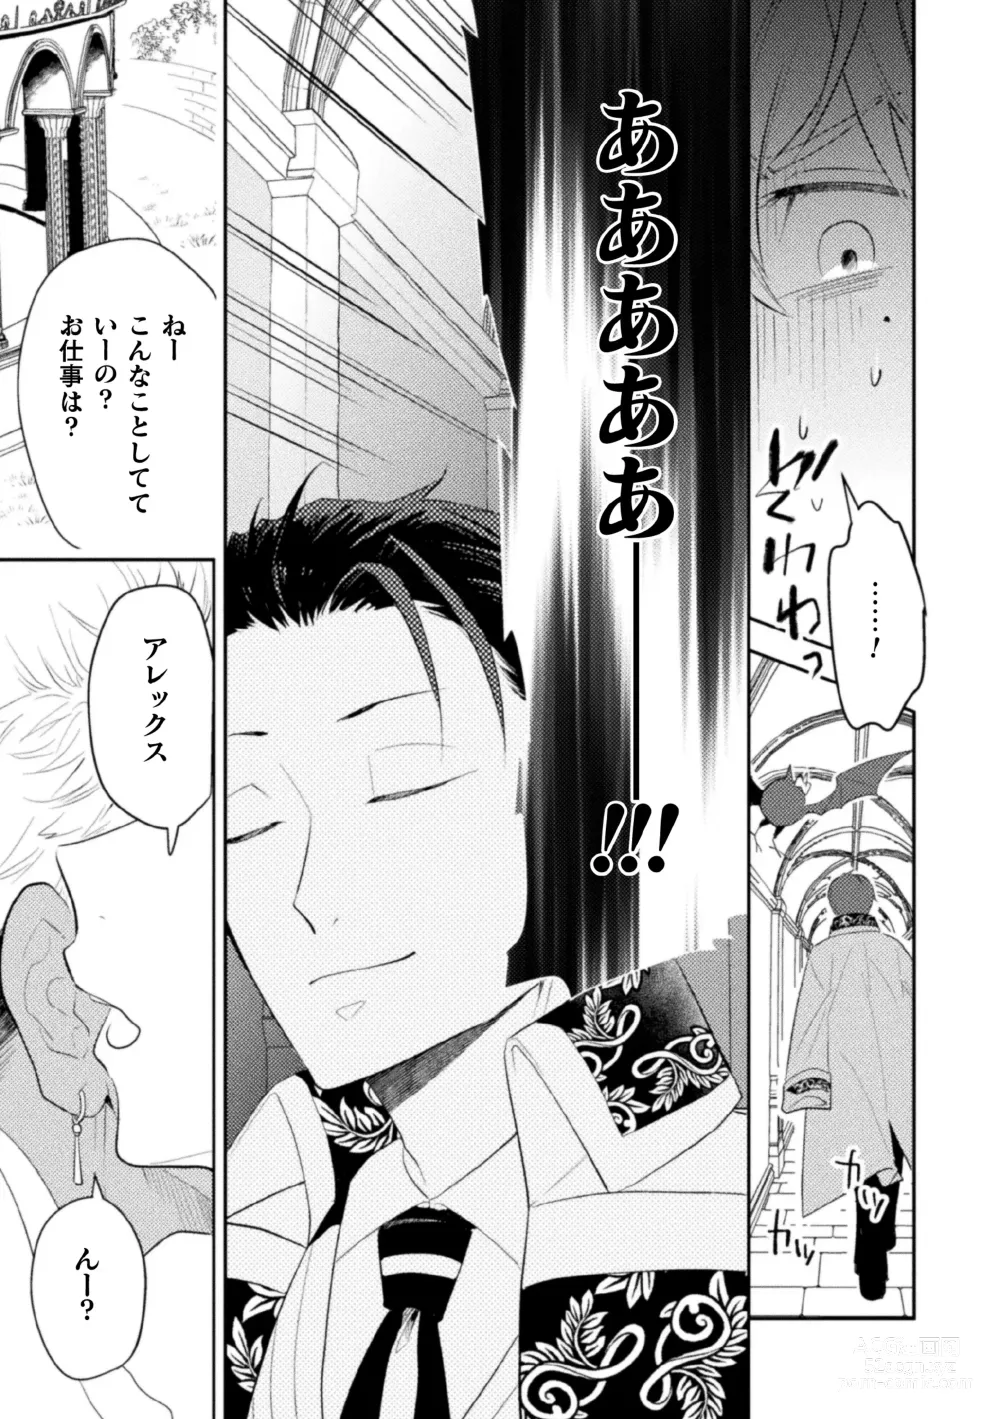 Page 5 of manga Zekkai Rougoku 4 Zekkai no Ori to Inma no Wana